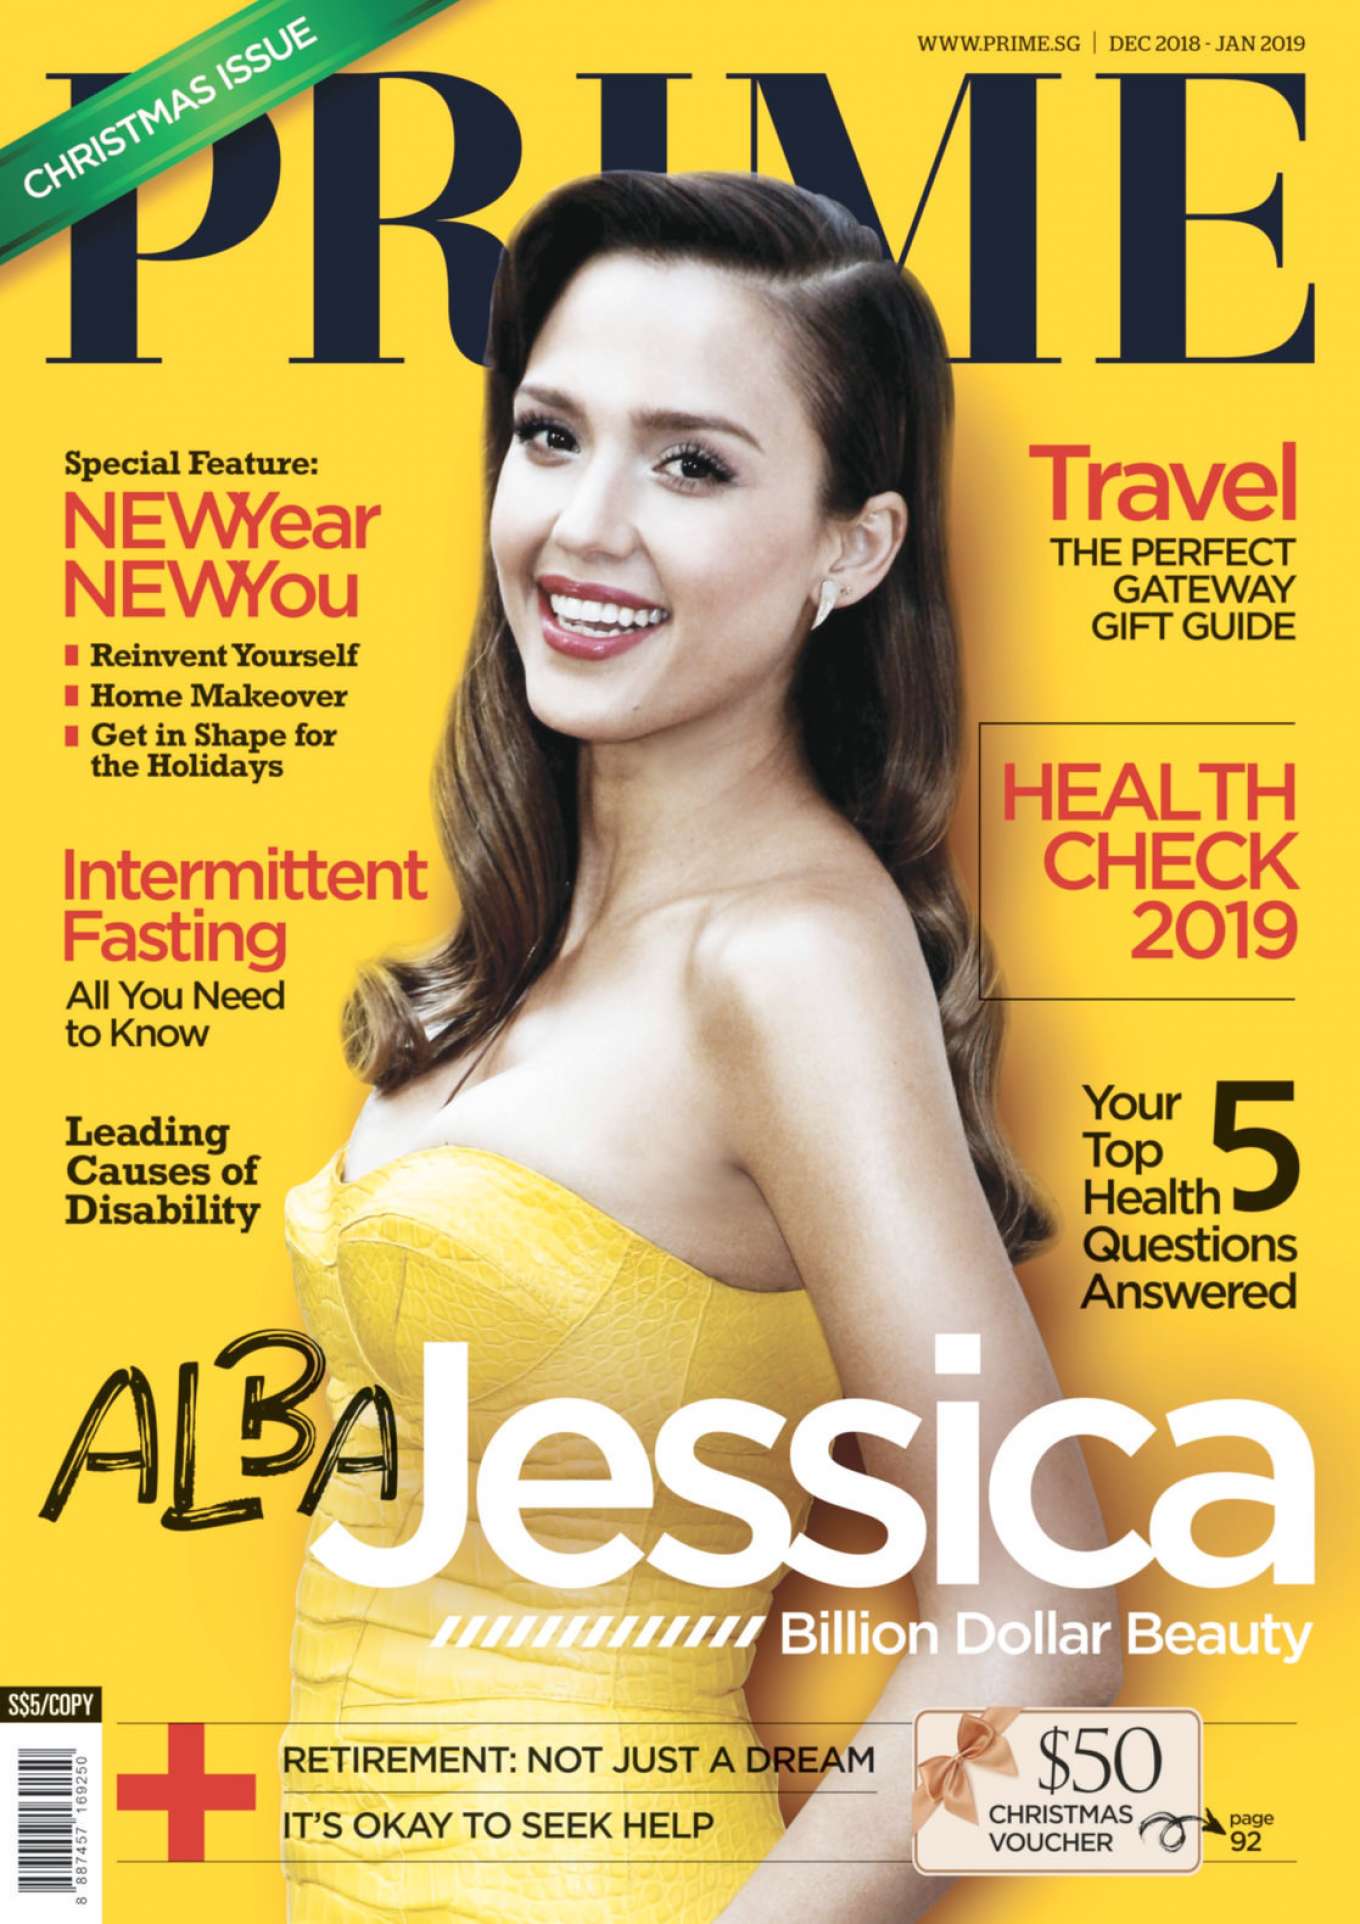 Jessica Alba â€“ Prime Singapore Cover (Dec 2018/Jan 2019)